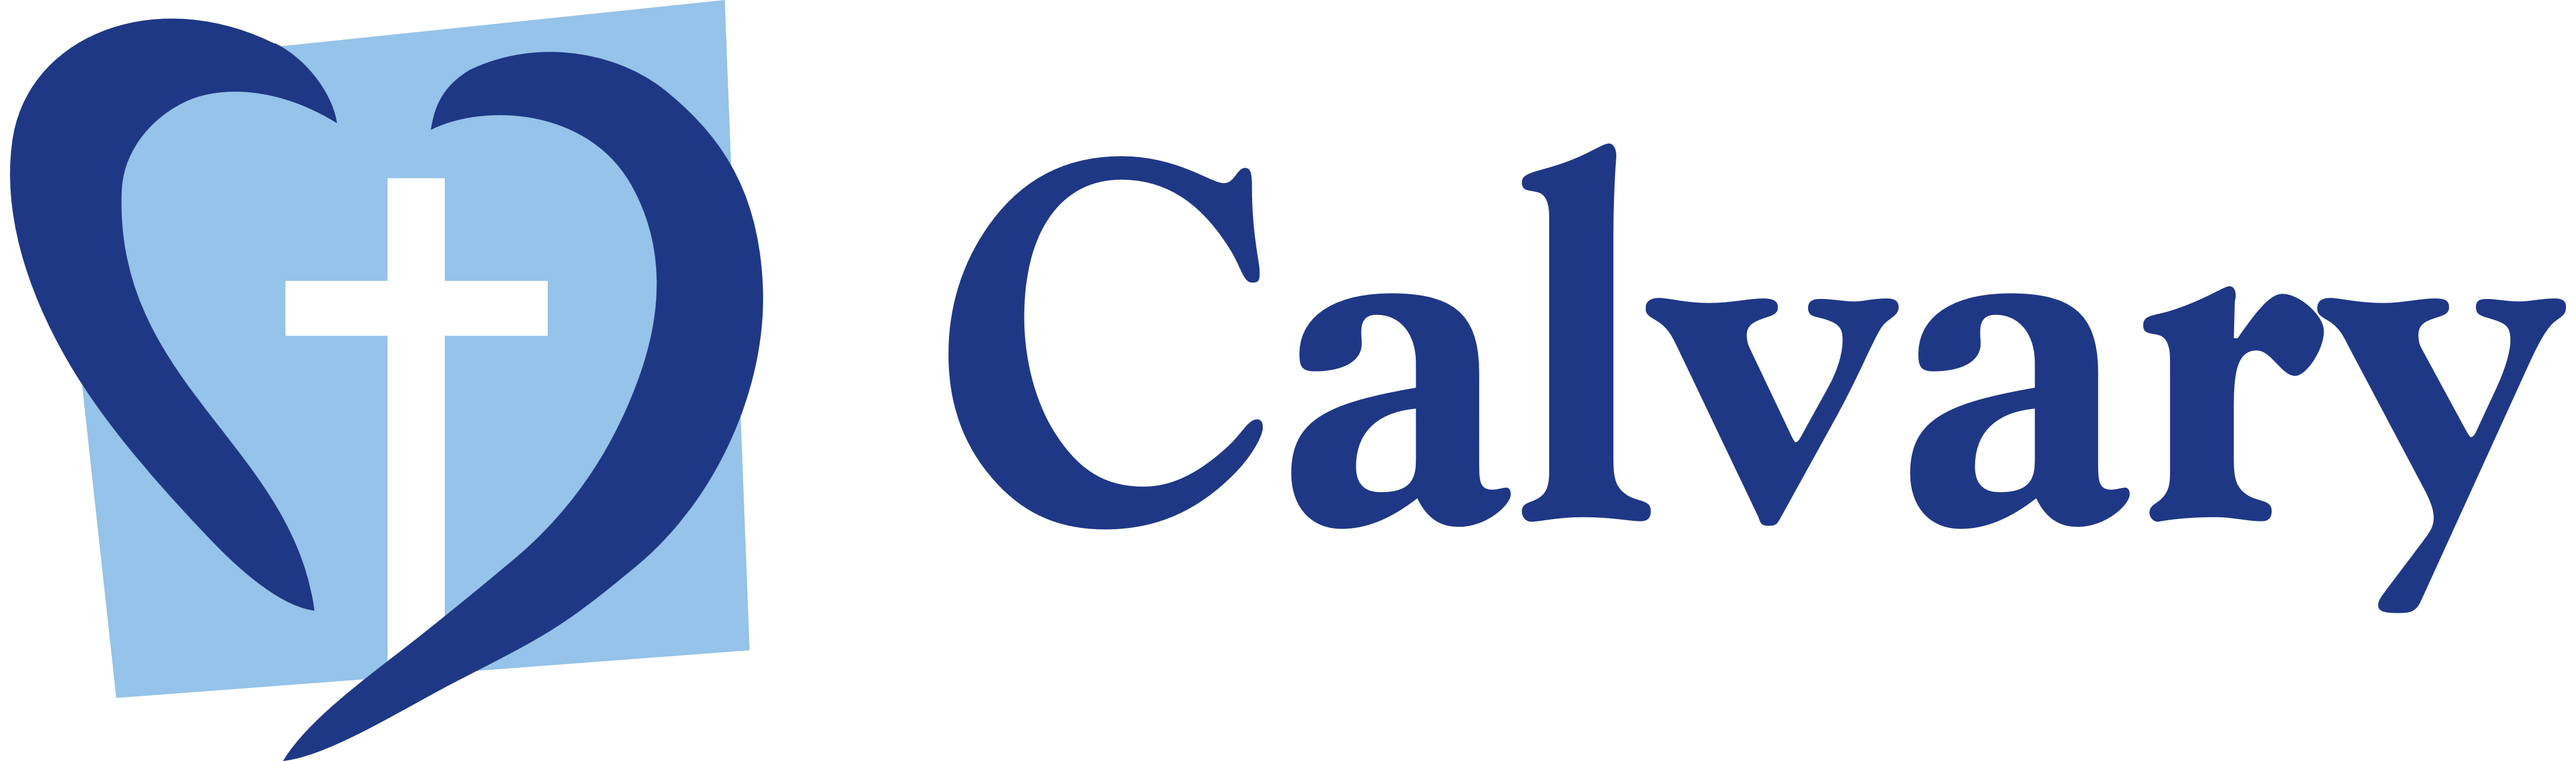 Calvary Health Care Bethlehem logo, logotype